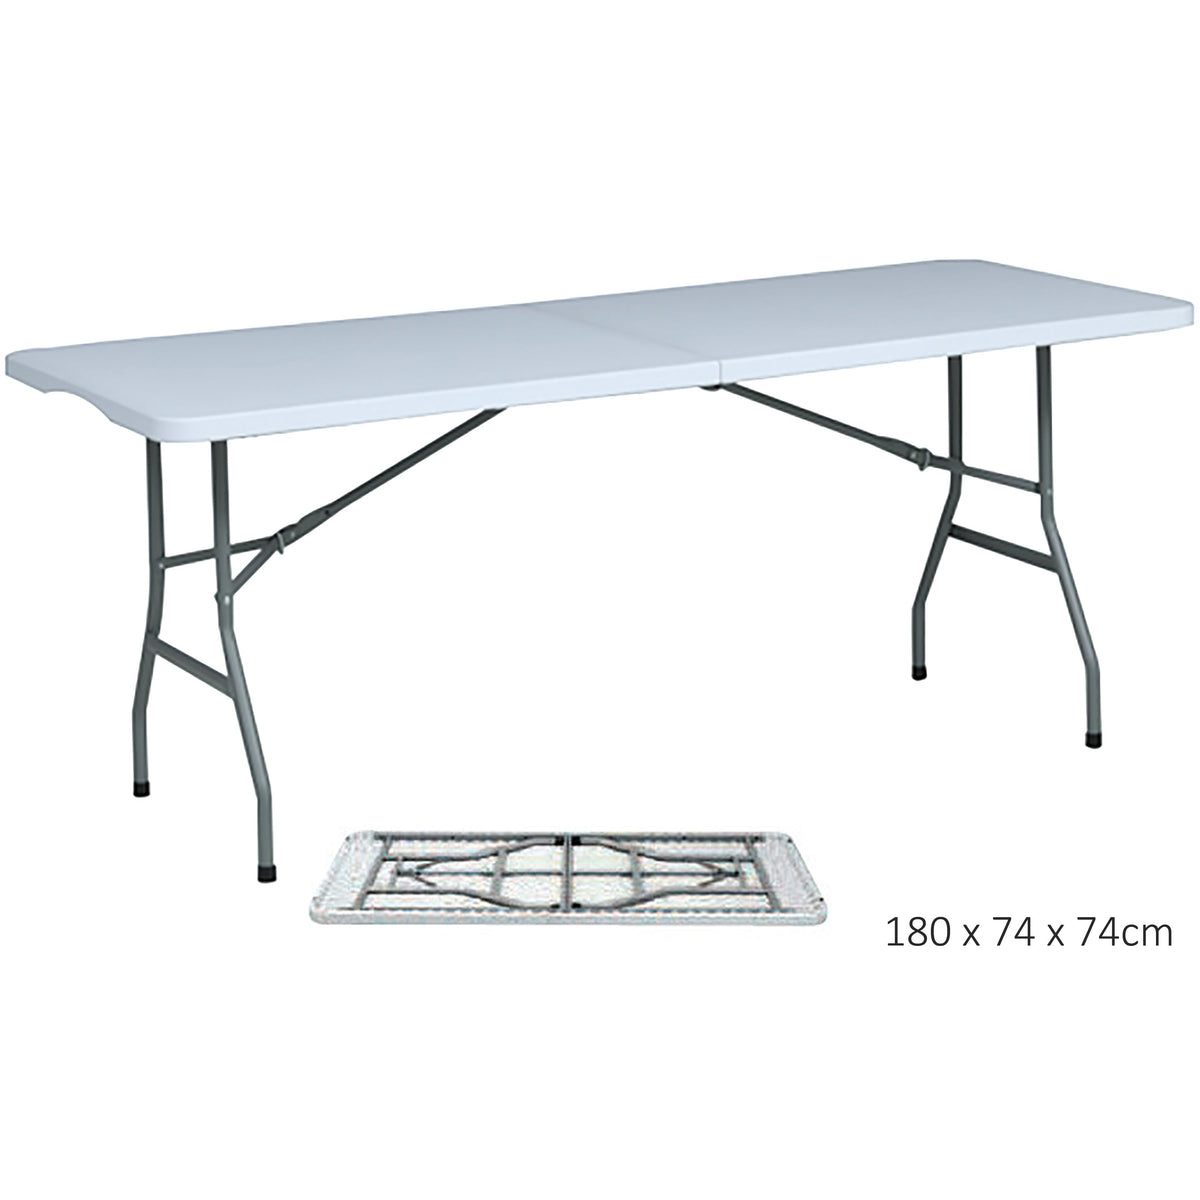 White Foldable Table - 180 x 74 x 74cm